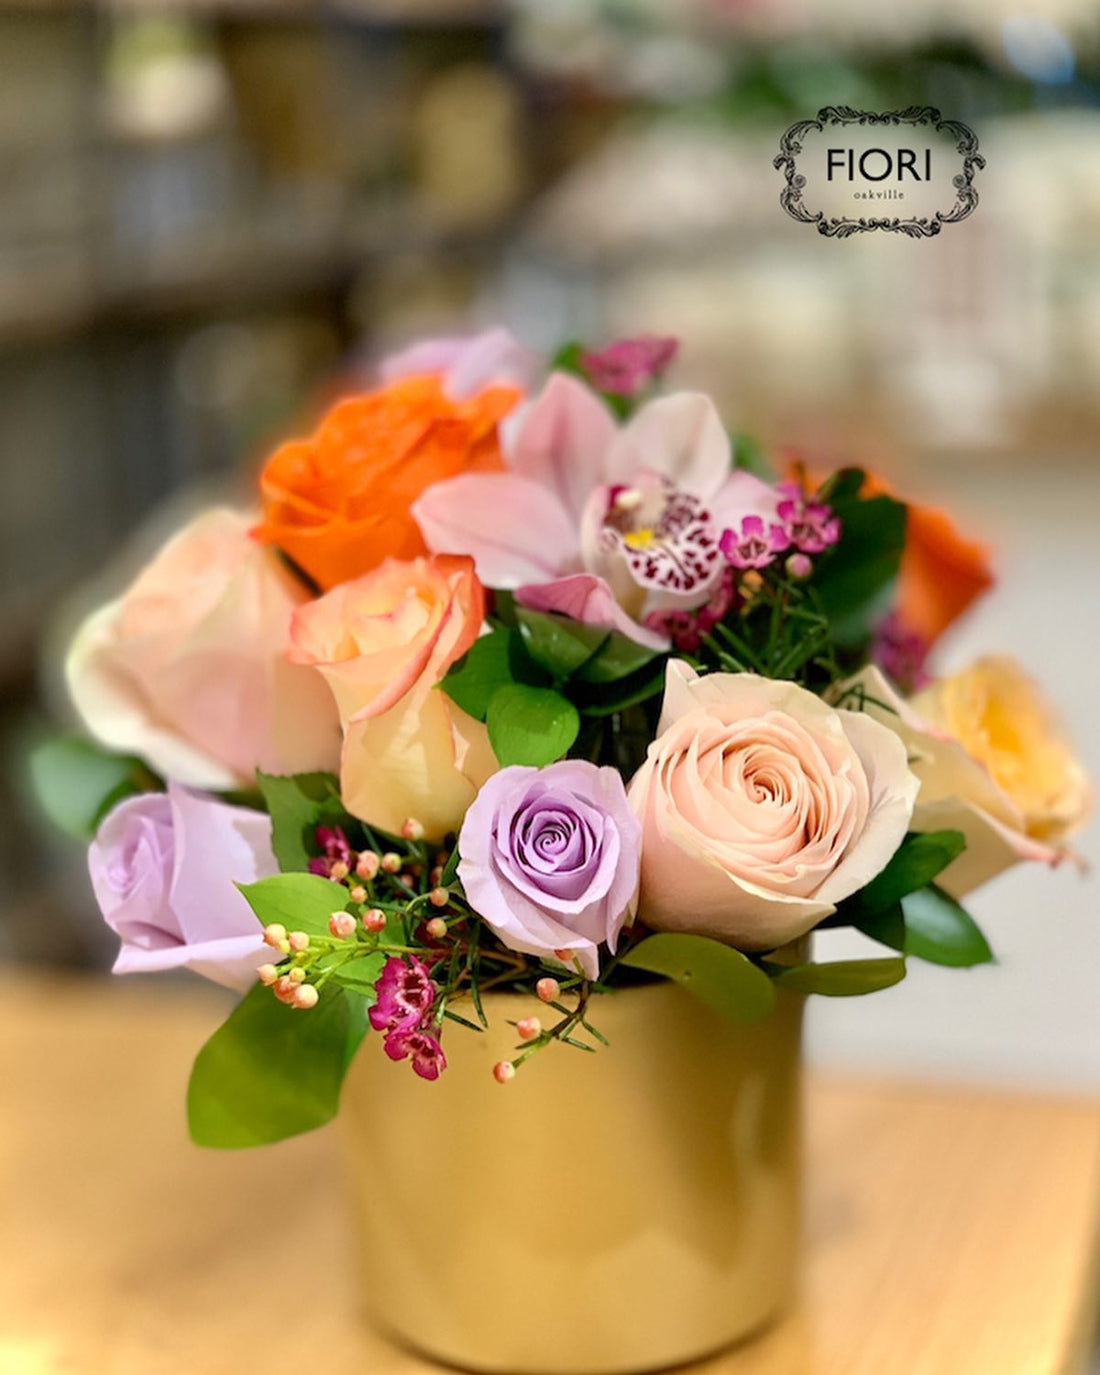 FIORI Oakville Florist. Order flowers online for delivery in Oakville, Burlington, Mississauga, Milton, Hamilton and Toronto